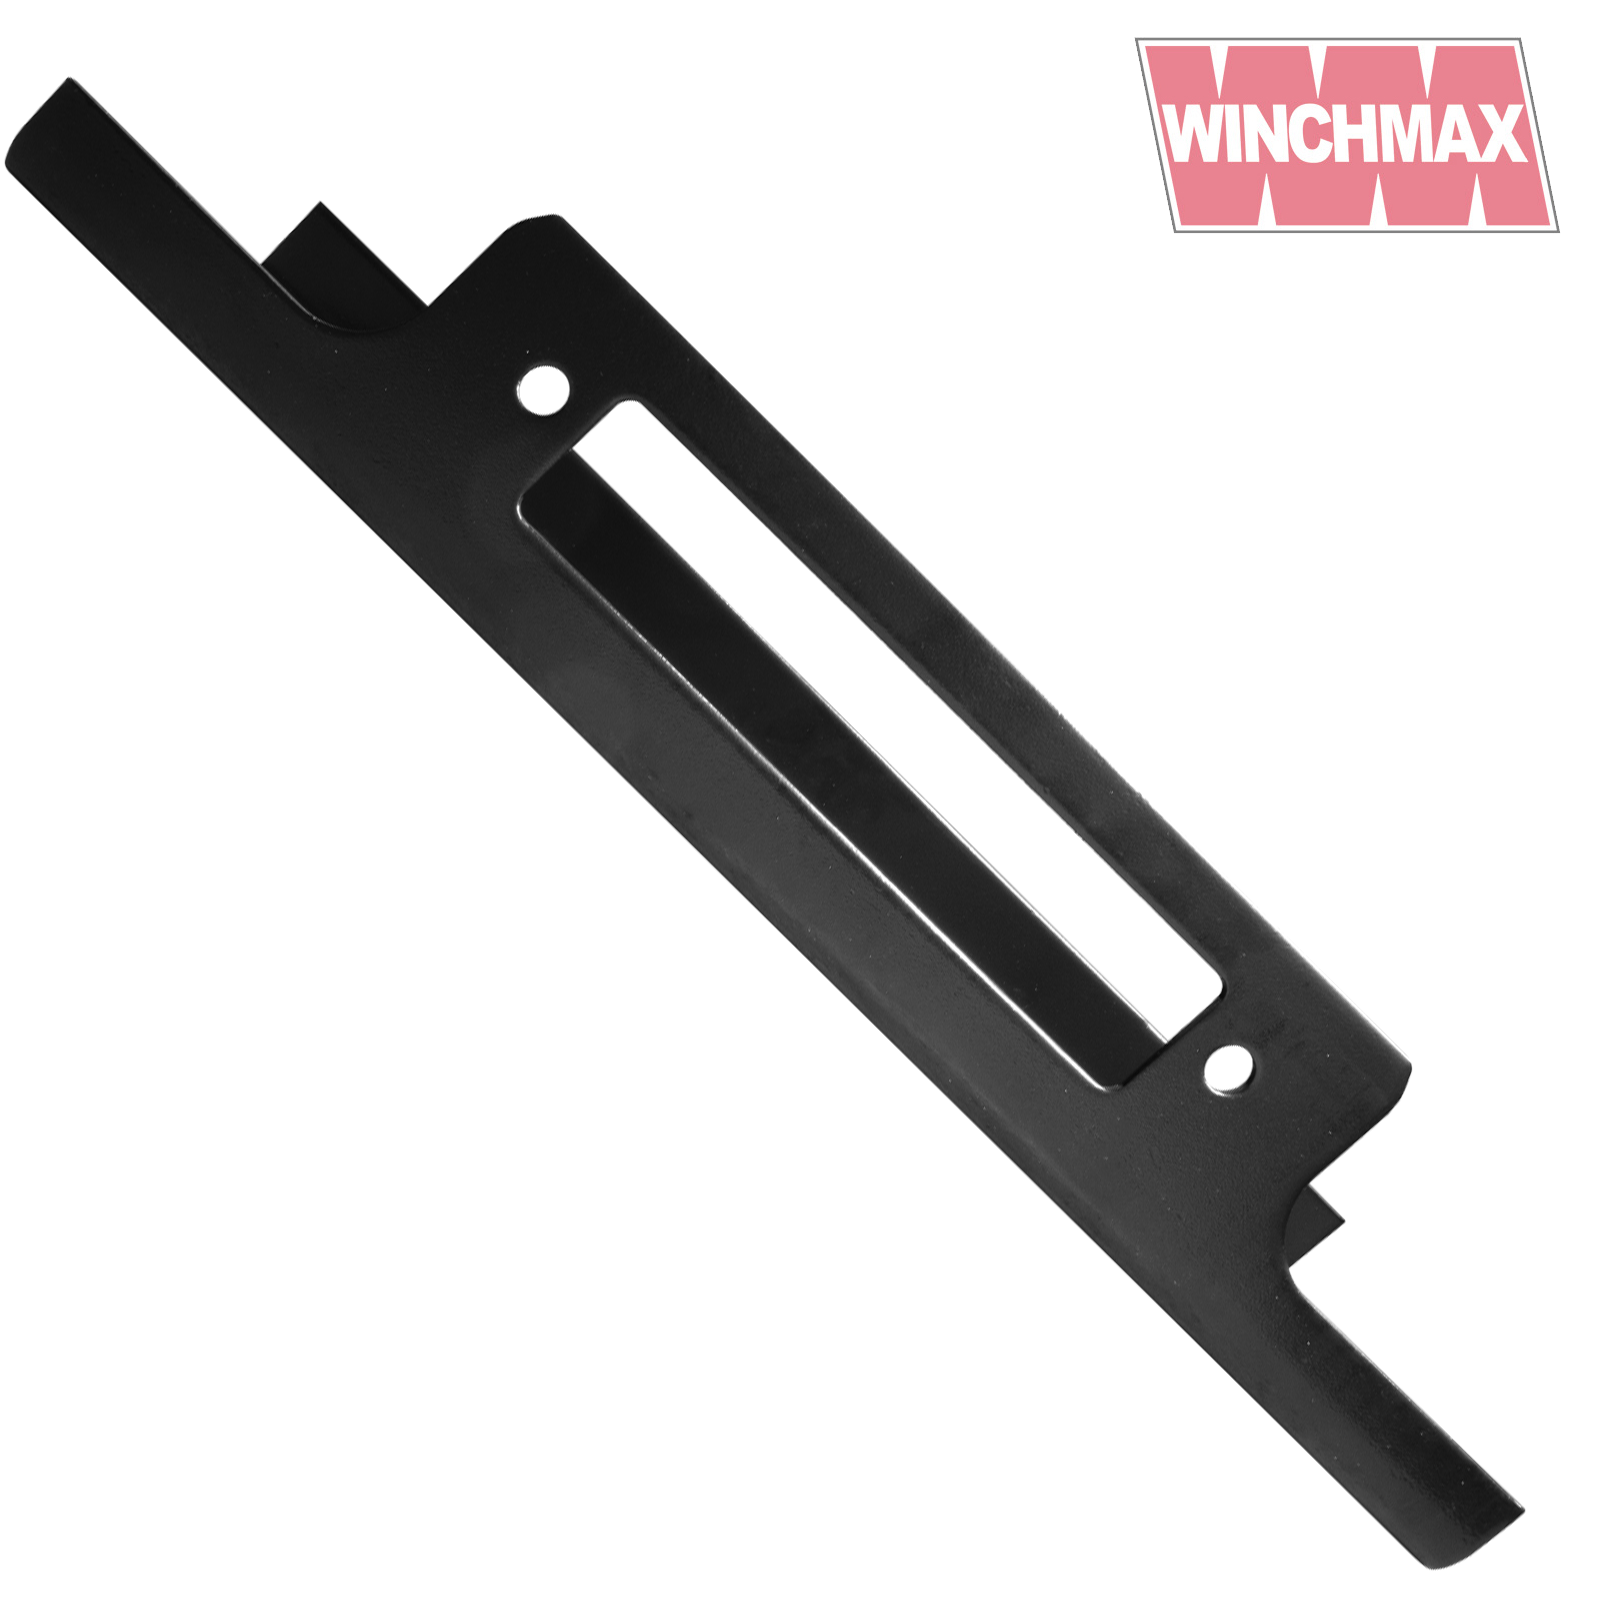 Winchmax WMMP3 winch mounting plate